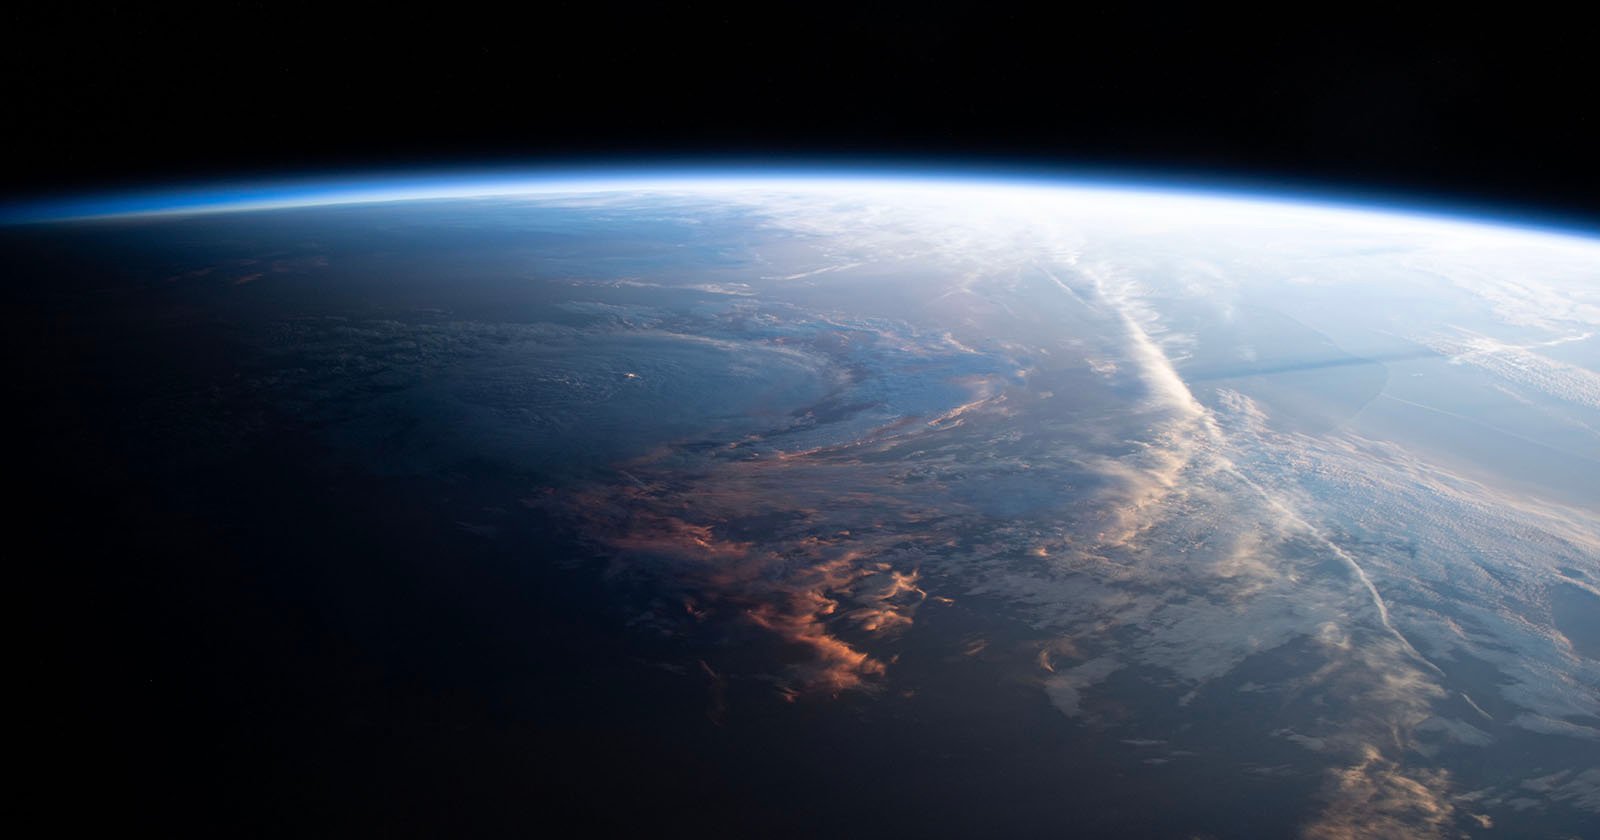  earthbound astronaut shares stunning photos captured while orbit 